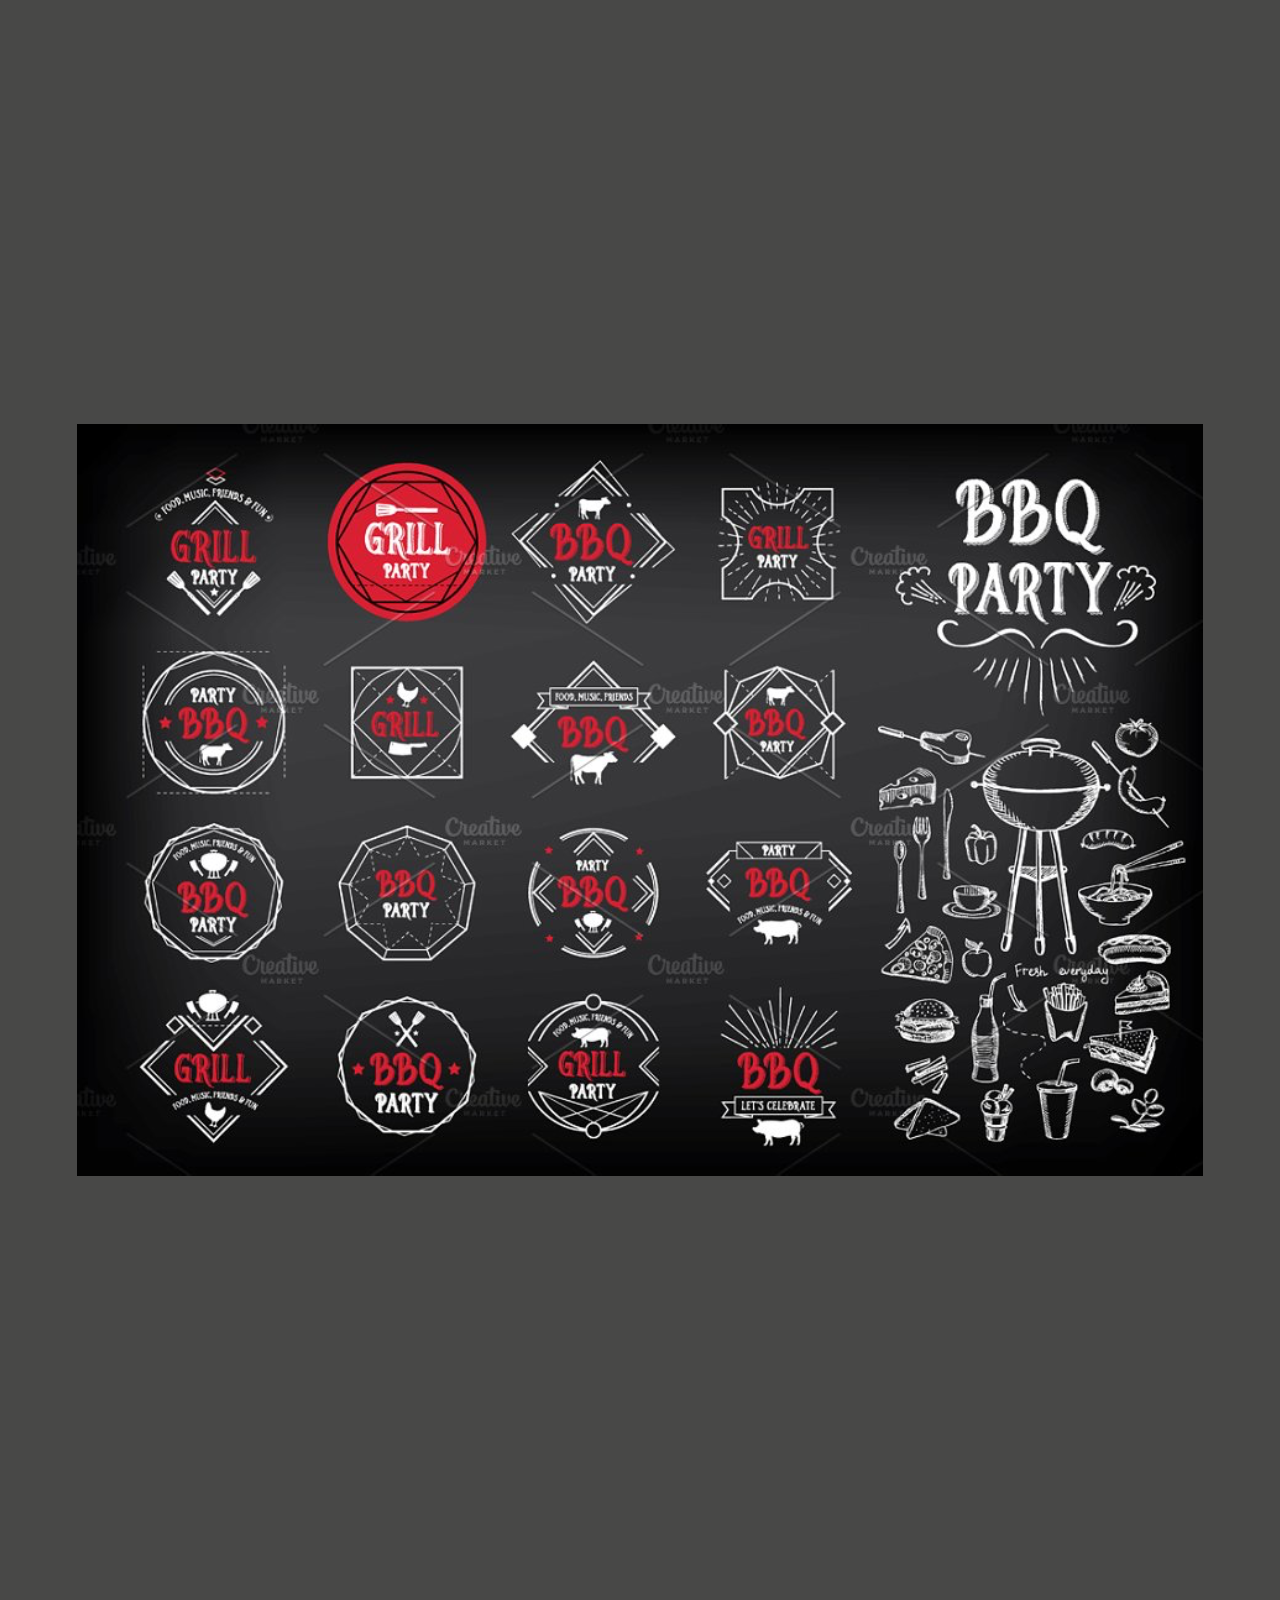 Bbq party badges pinterest image.